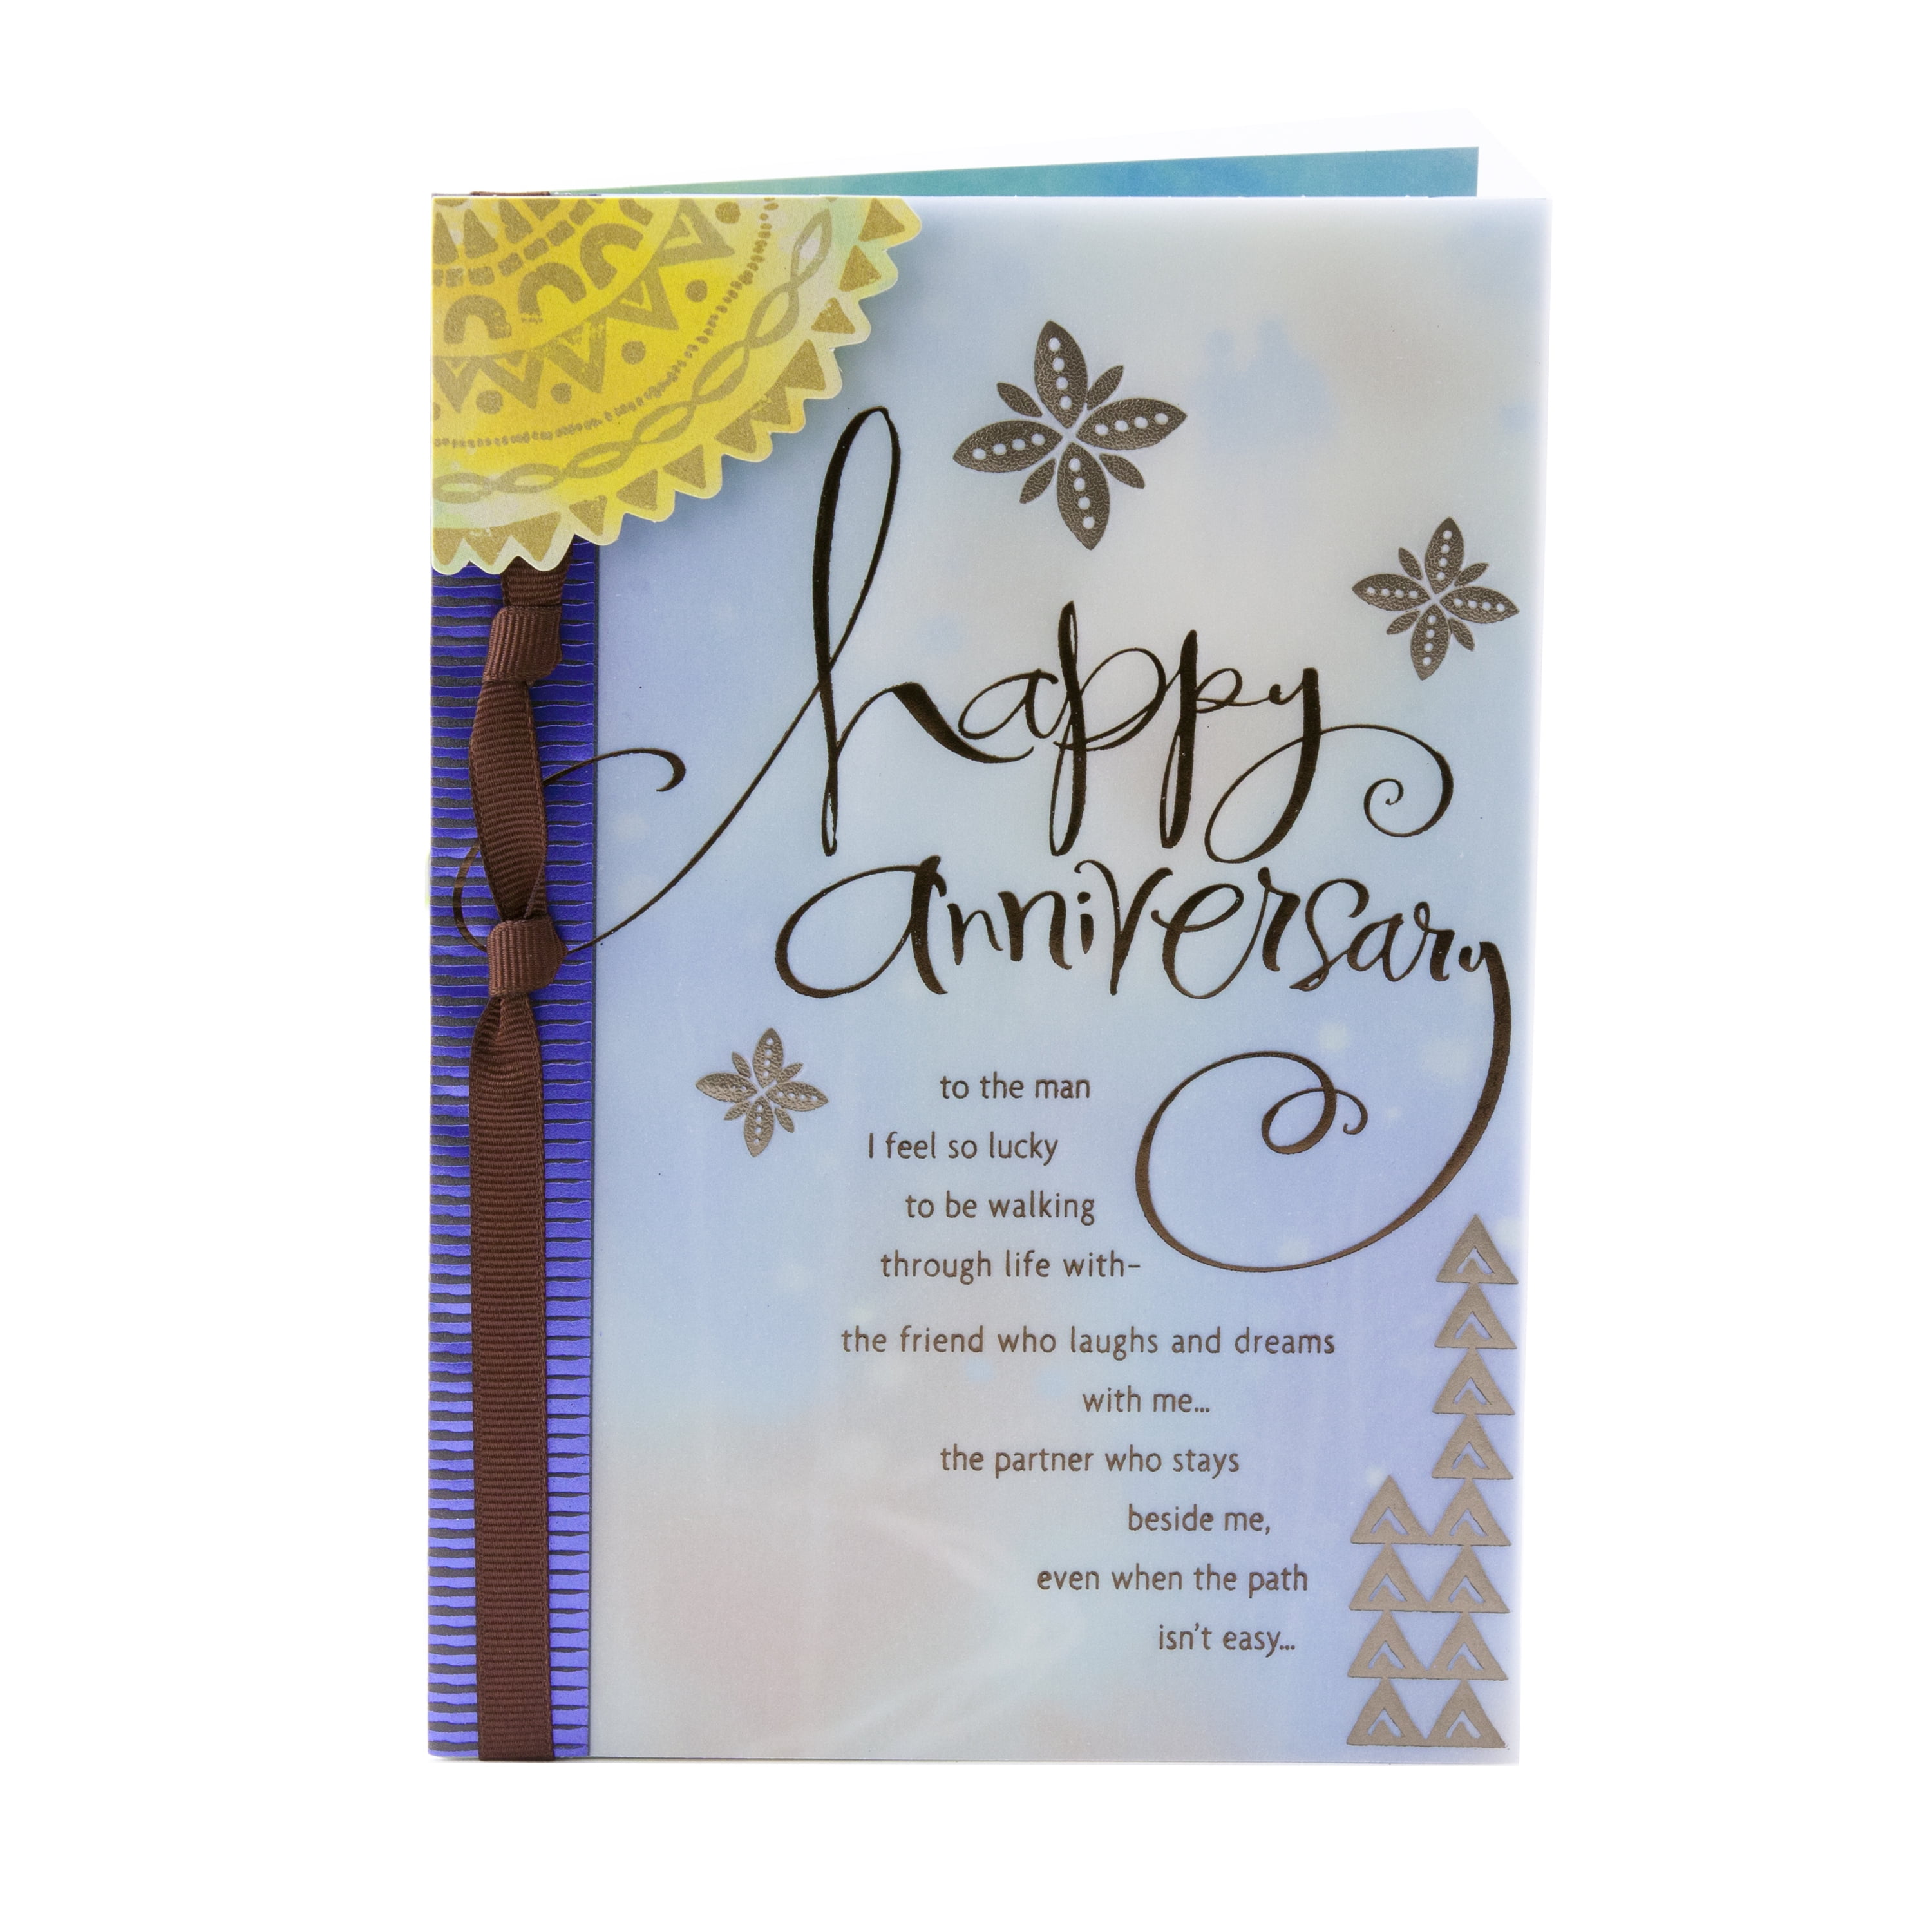 DEGASKEN 2 Year Anniversary Steel Gifts Wallet Card for Men Him Boyfriend,  Second 2nd Yr Wedding Anniversary Keepsake Gift for Husband Wife Her